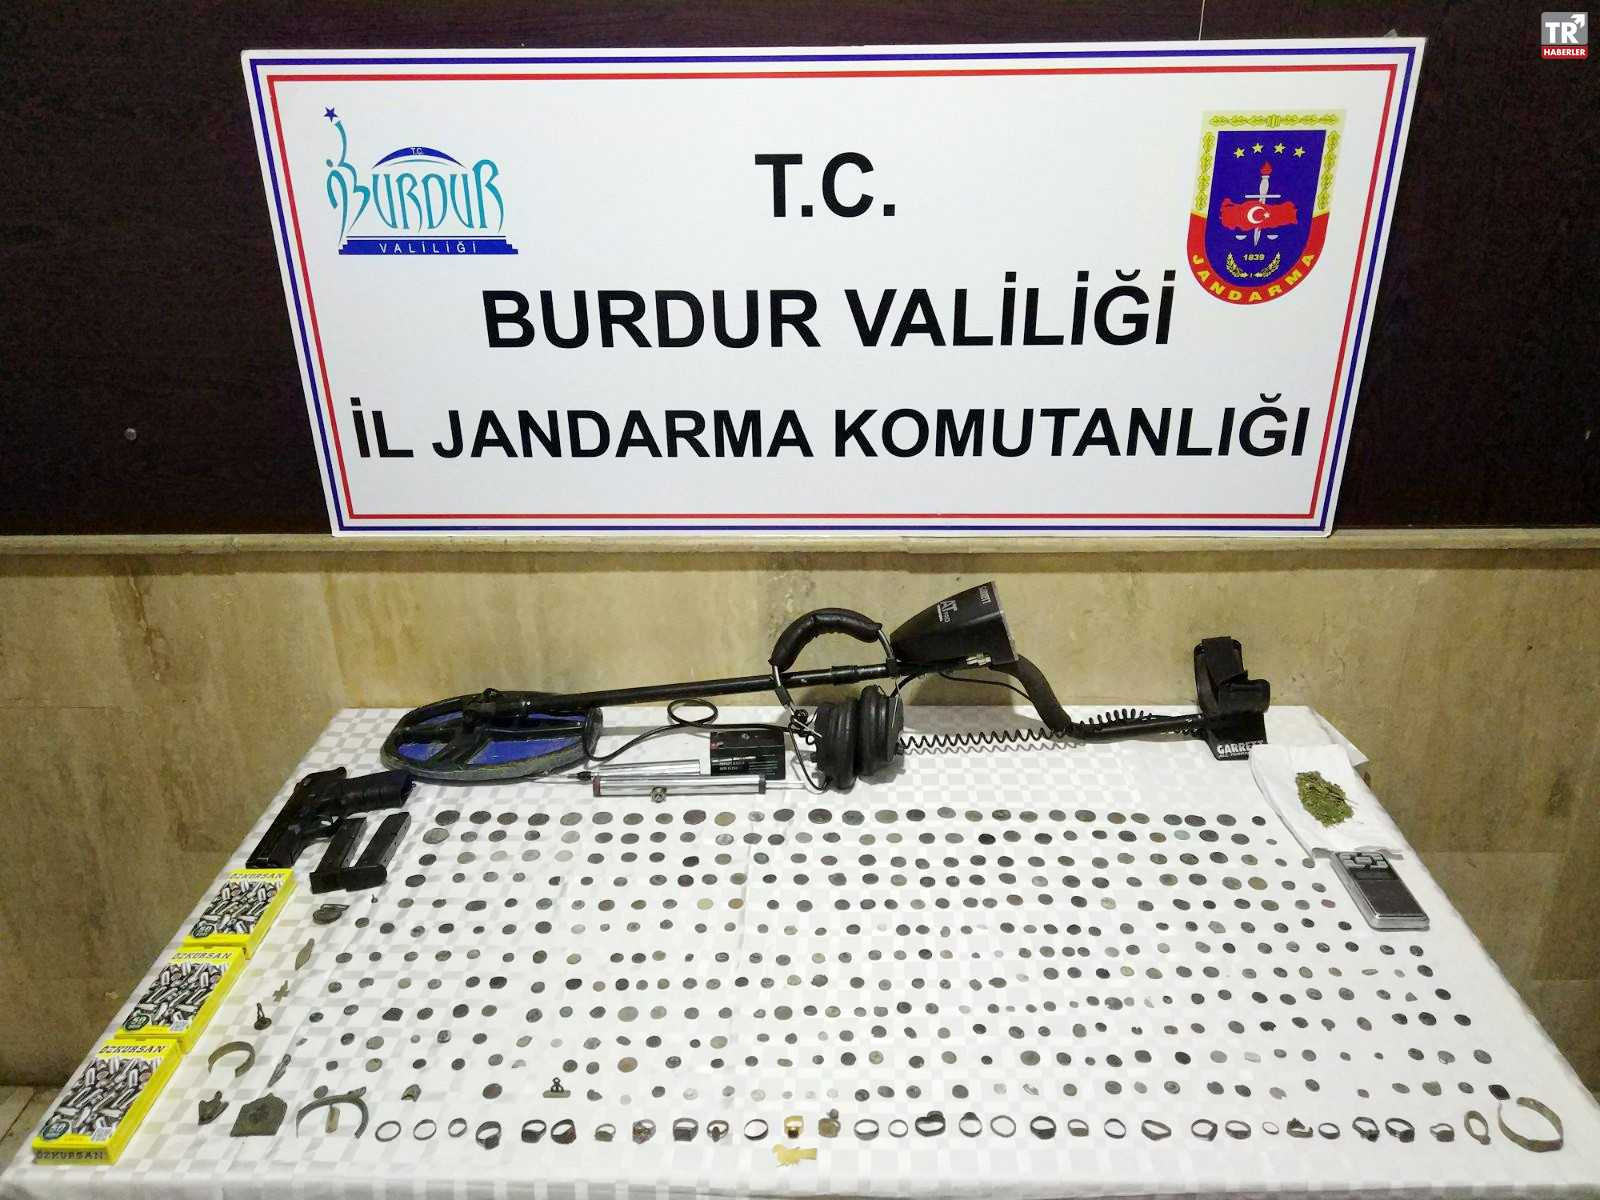 Burdur'da tarihi eser operasyonu